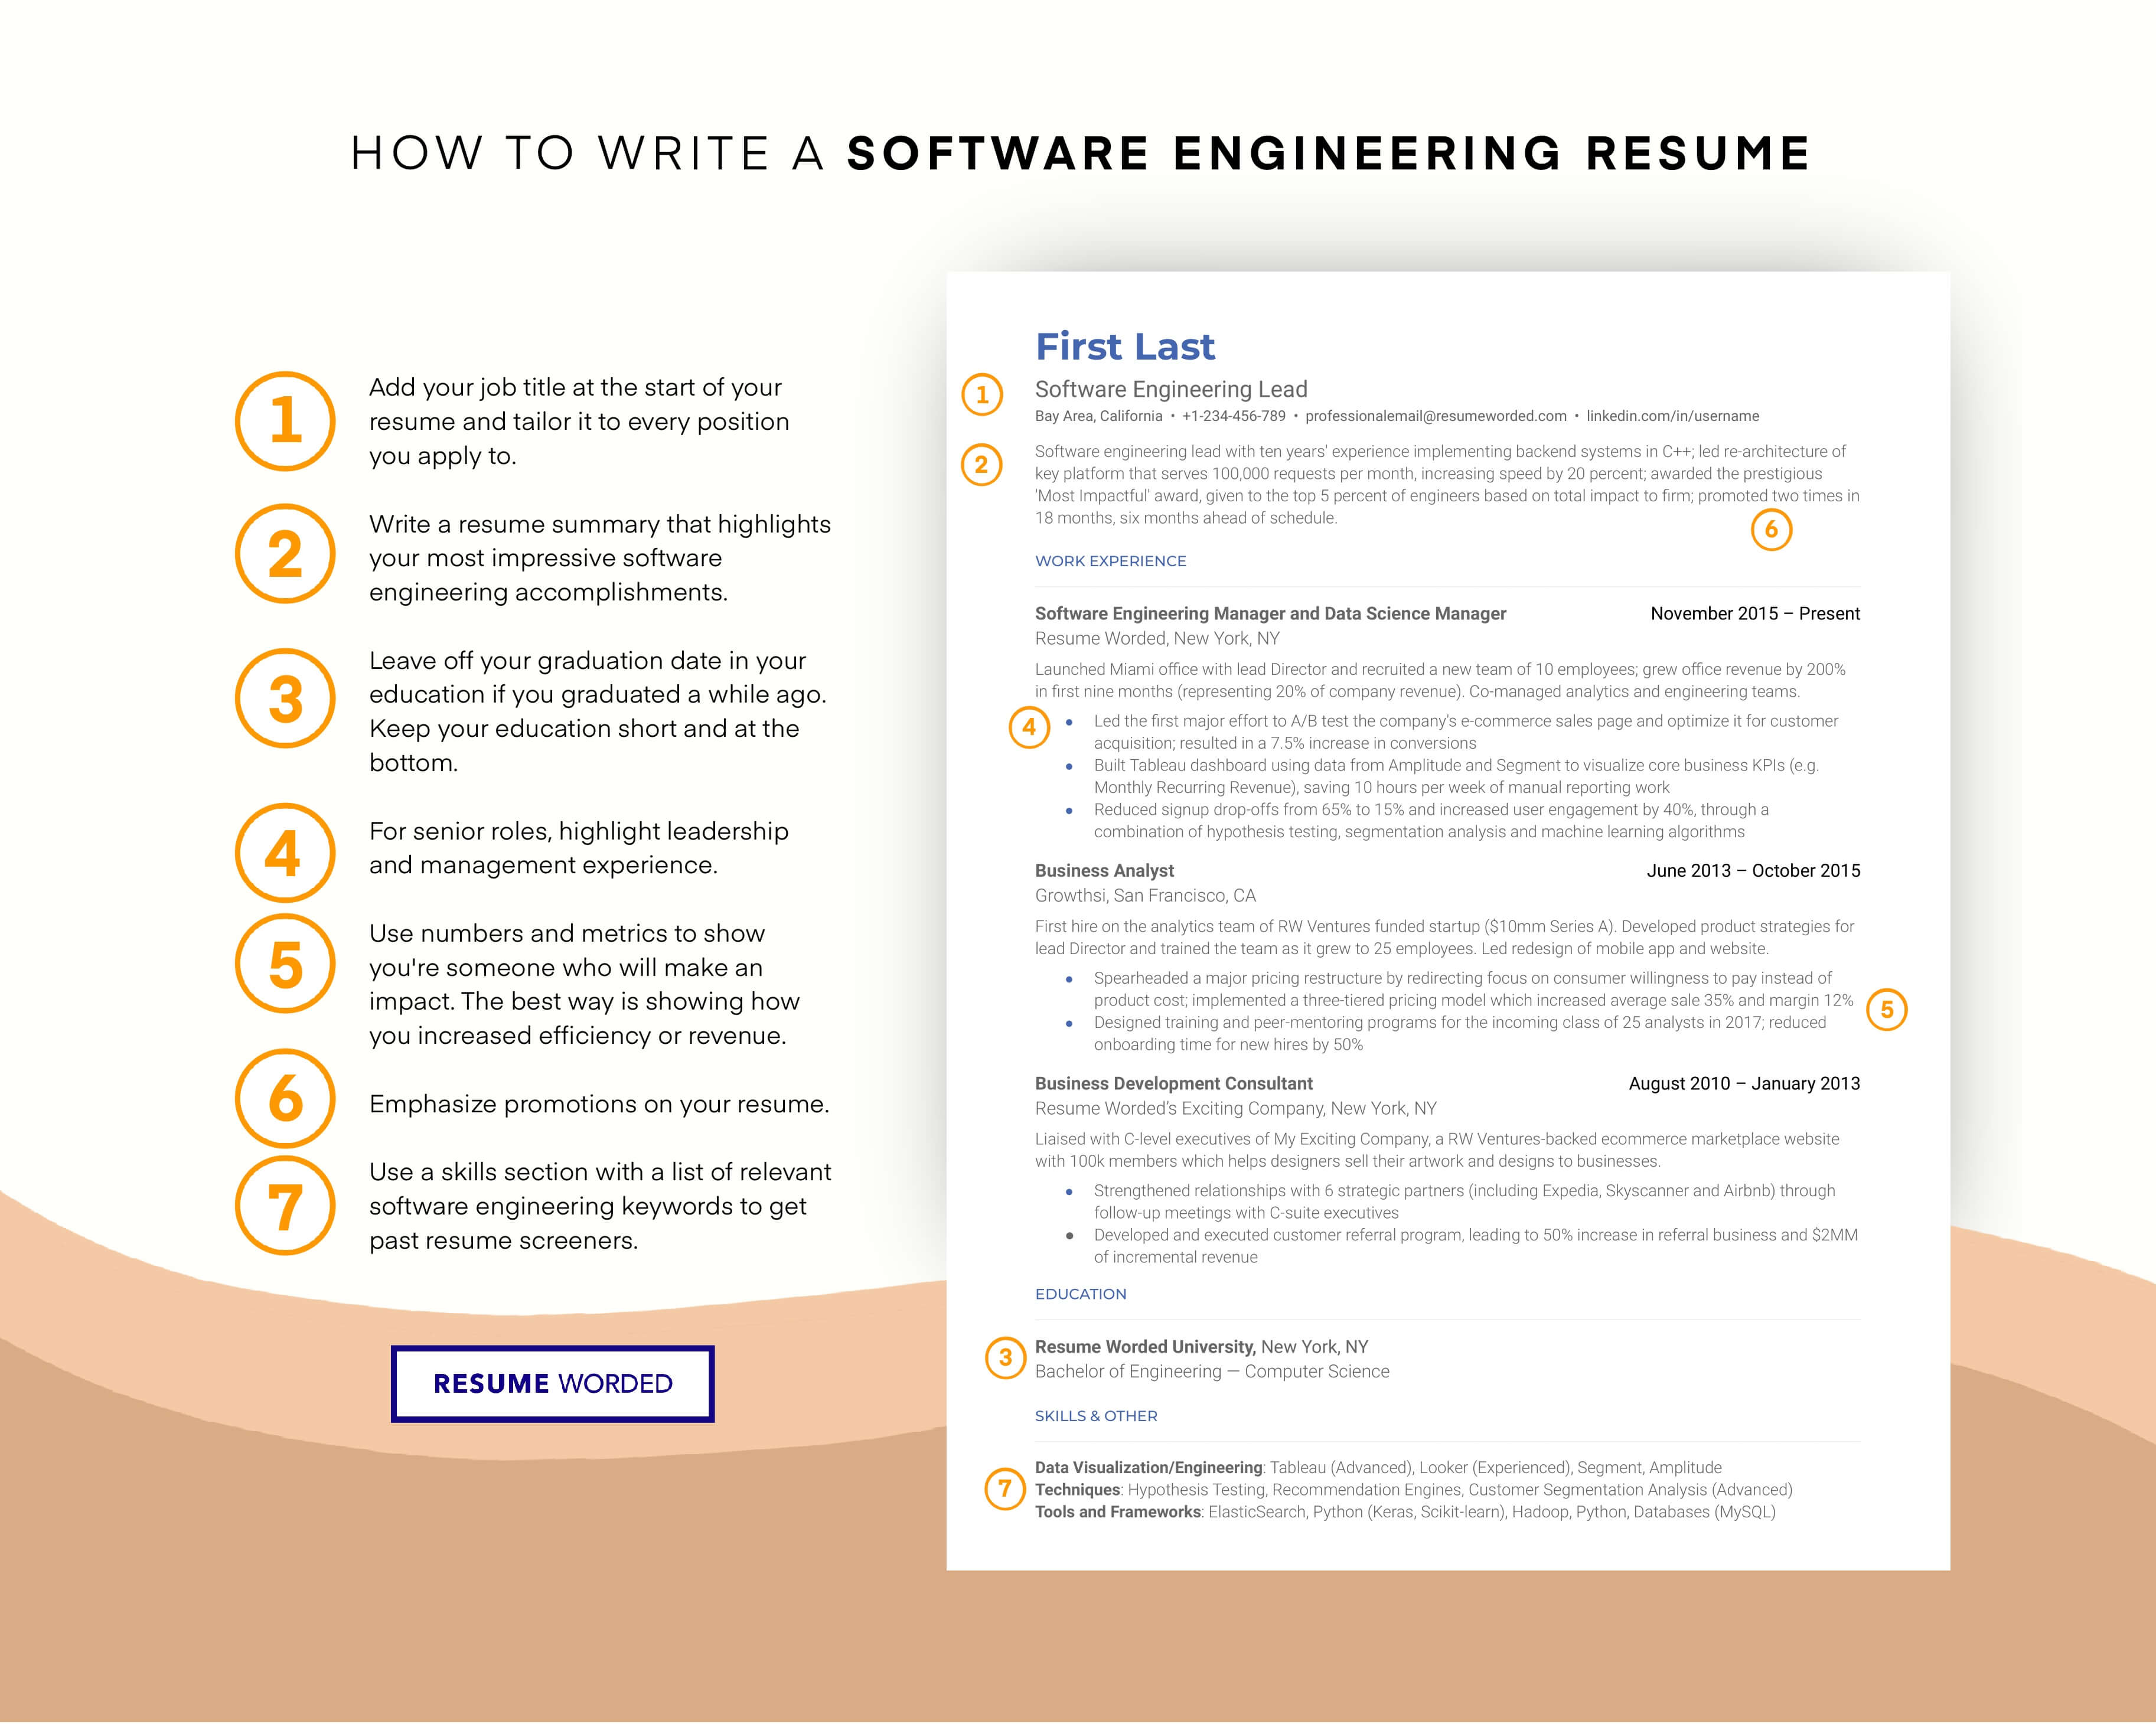 Show software testing proficiency - QA Engineer CV